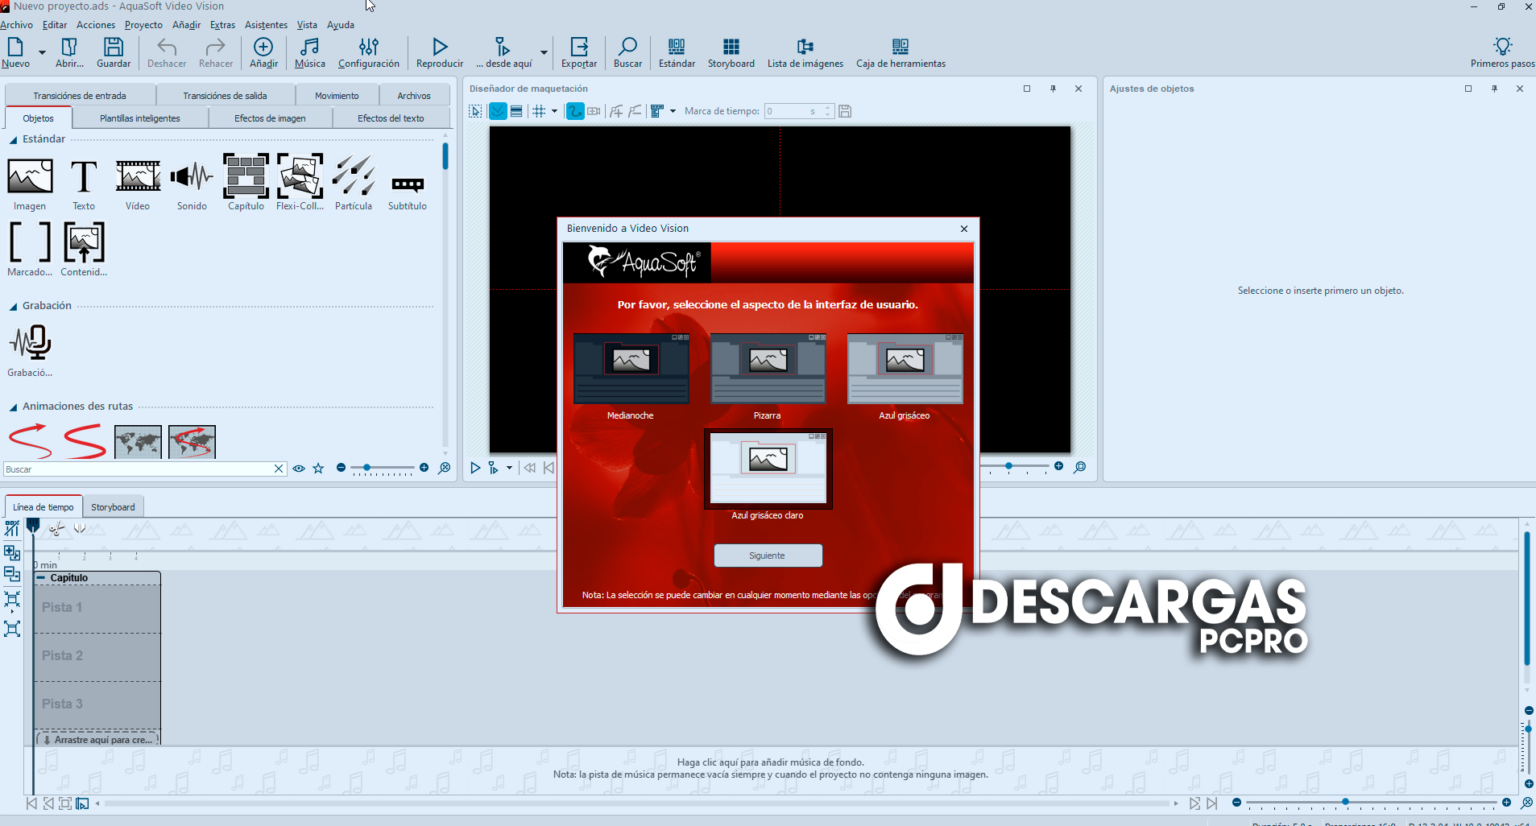 download the new AquaSoft Video Vision 14.2.13